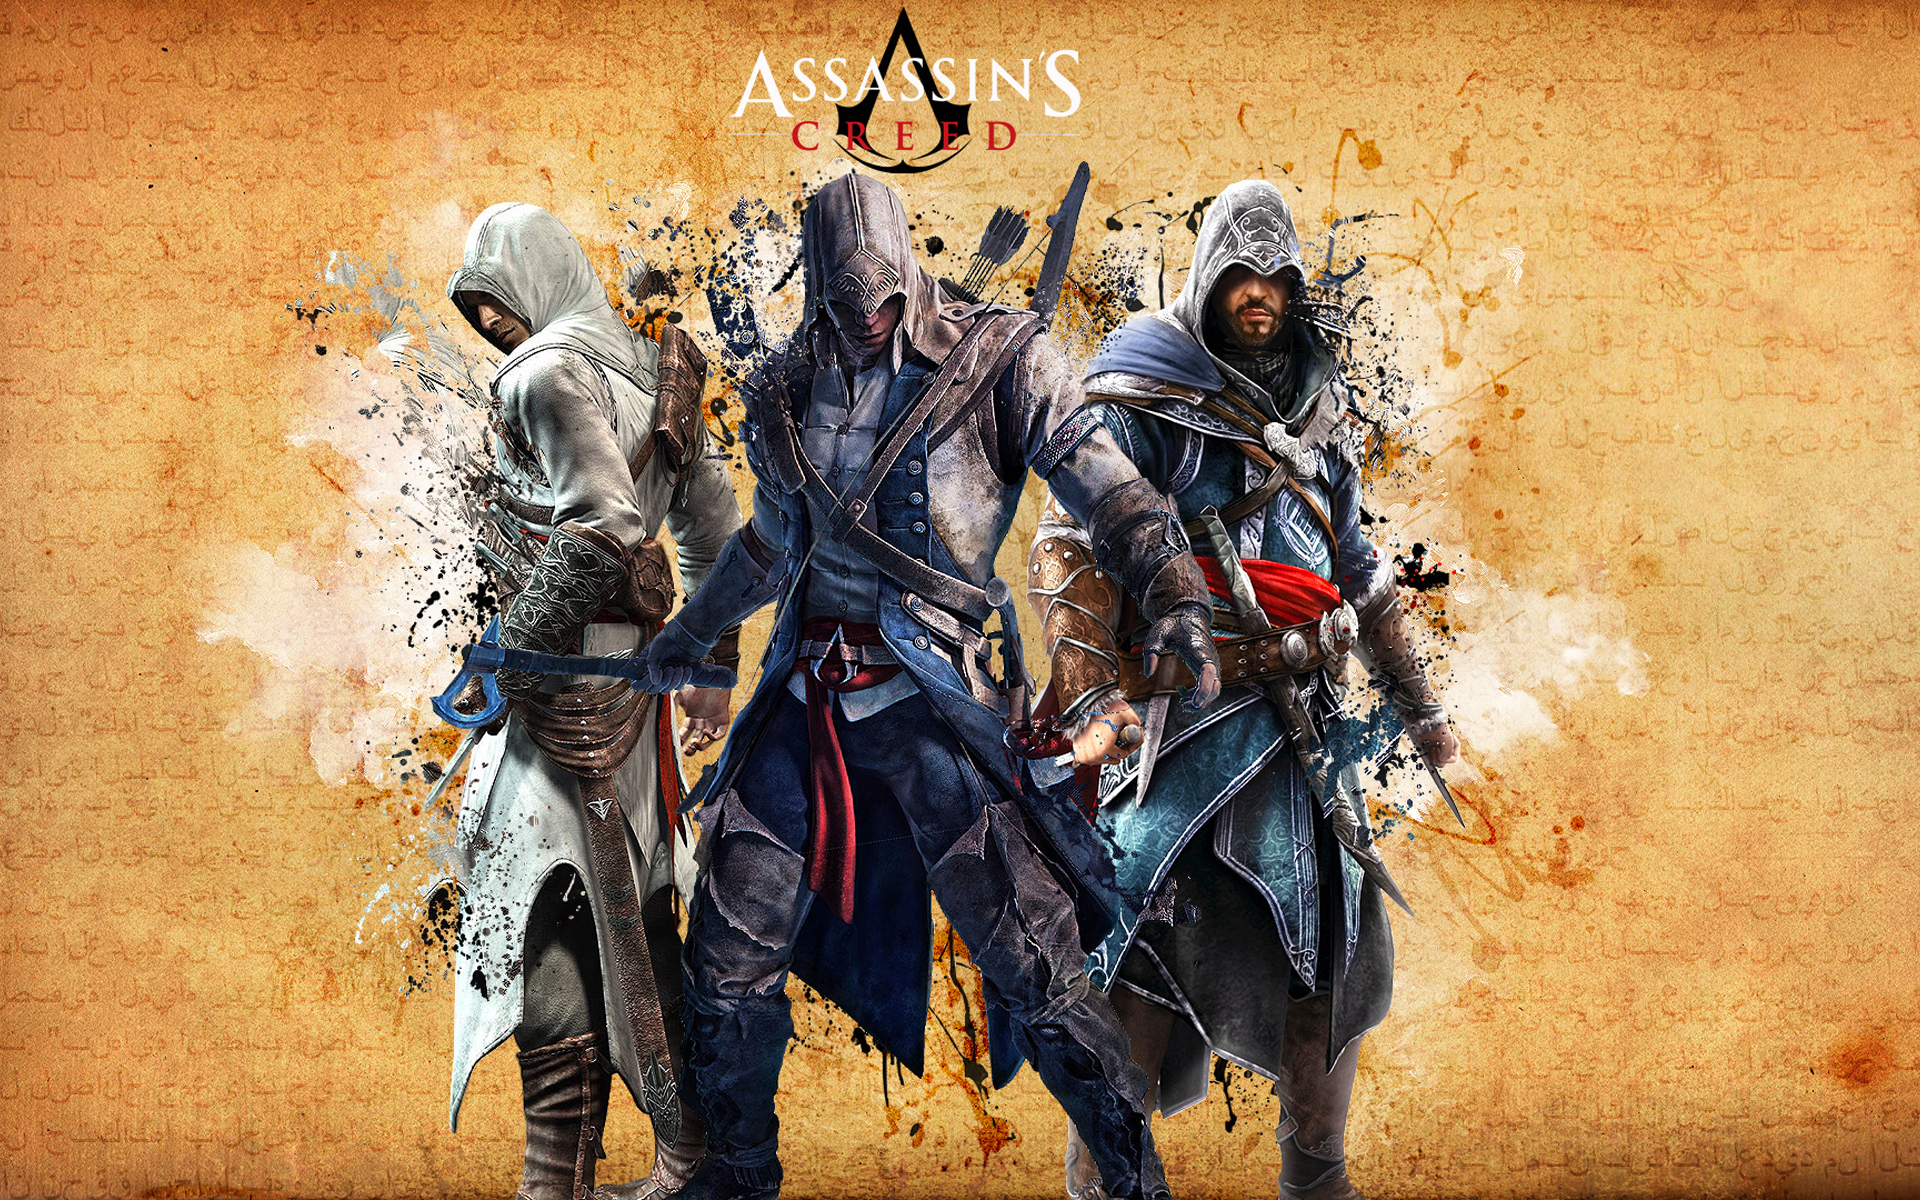 Horizontal Wallpaper connor (assassin's creed), video game, assassin's creed, altair (assassin's creed), ezio (assassin's creed)